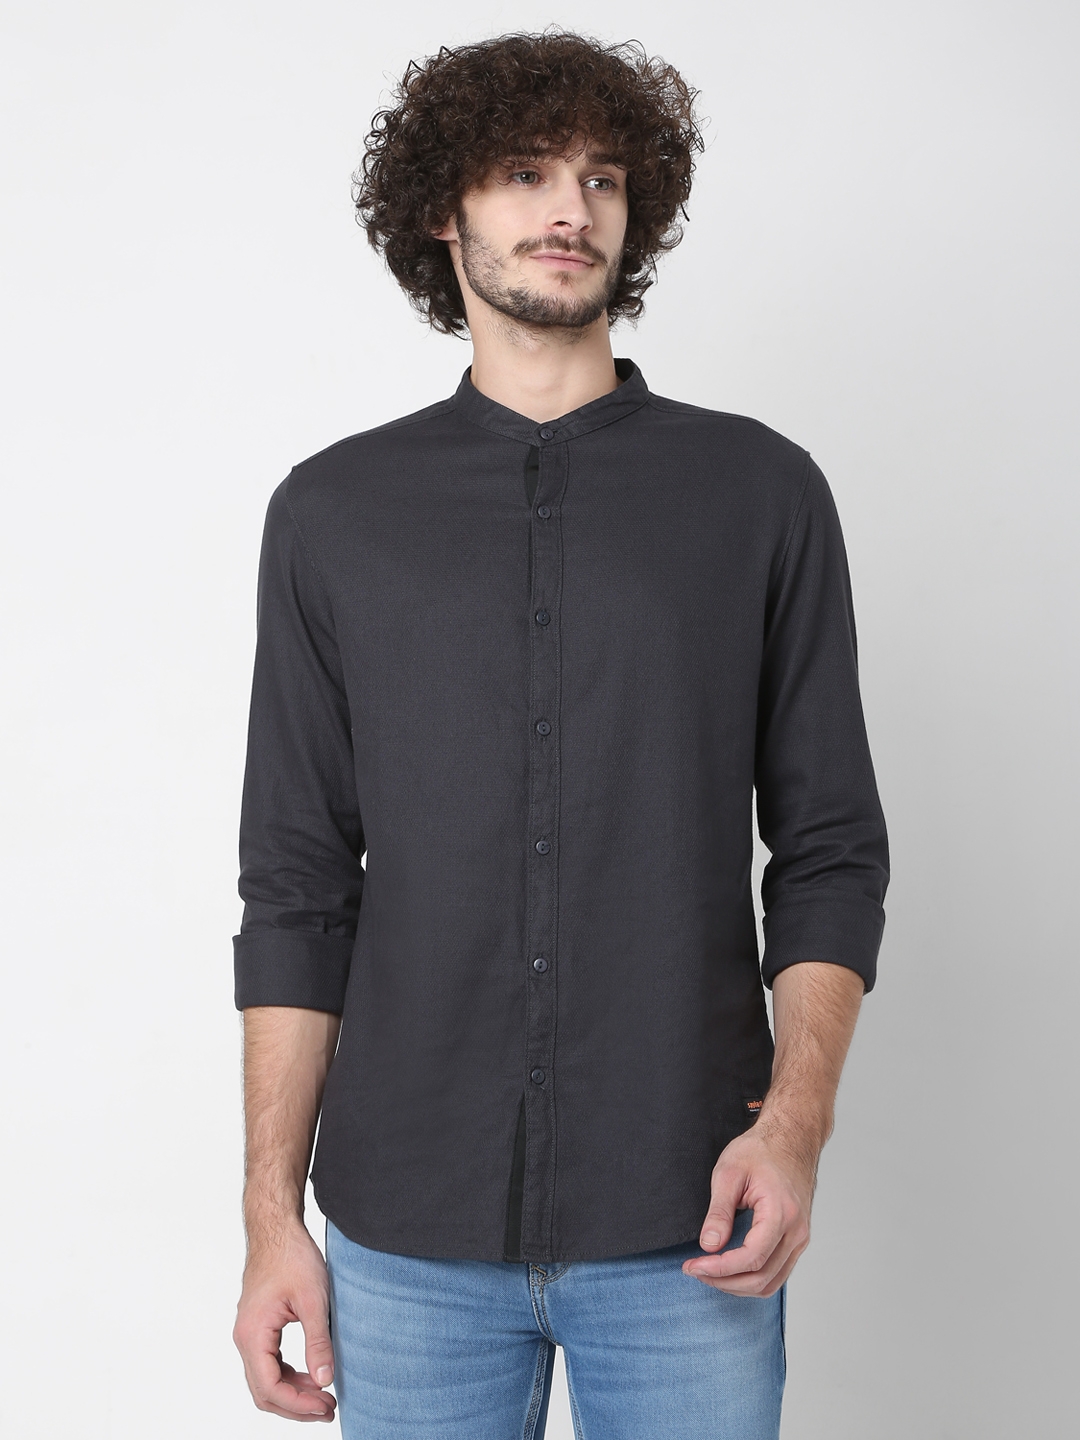 Spykar | Spykar Black Cotton Slim Fit Shirts for Men